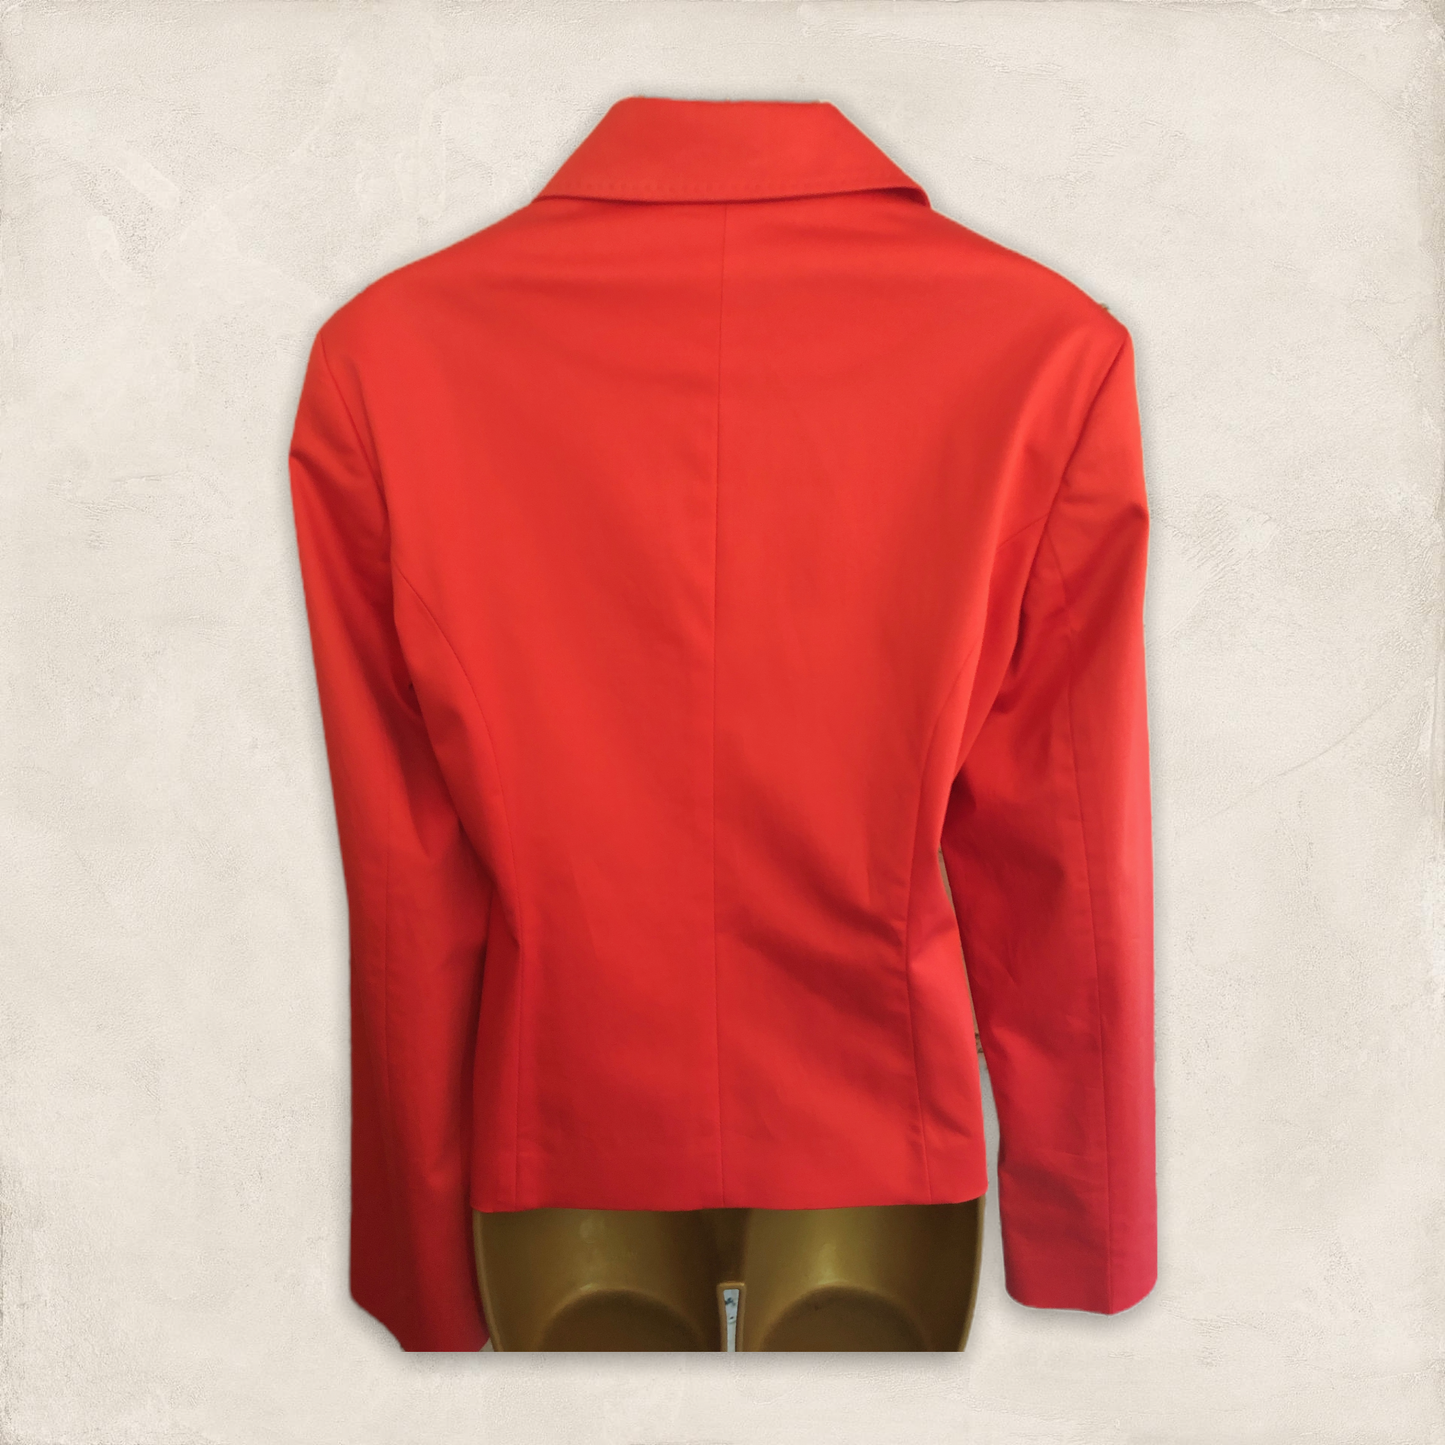 Marie Mero Coral Cotton Jacket Blazer UK 14 US 10 EU 42 IT 46 BNWT RRP £215.00 Timeless Fashions